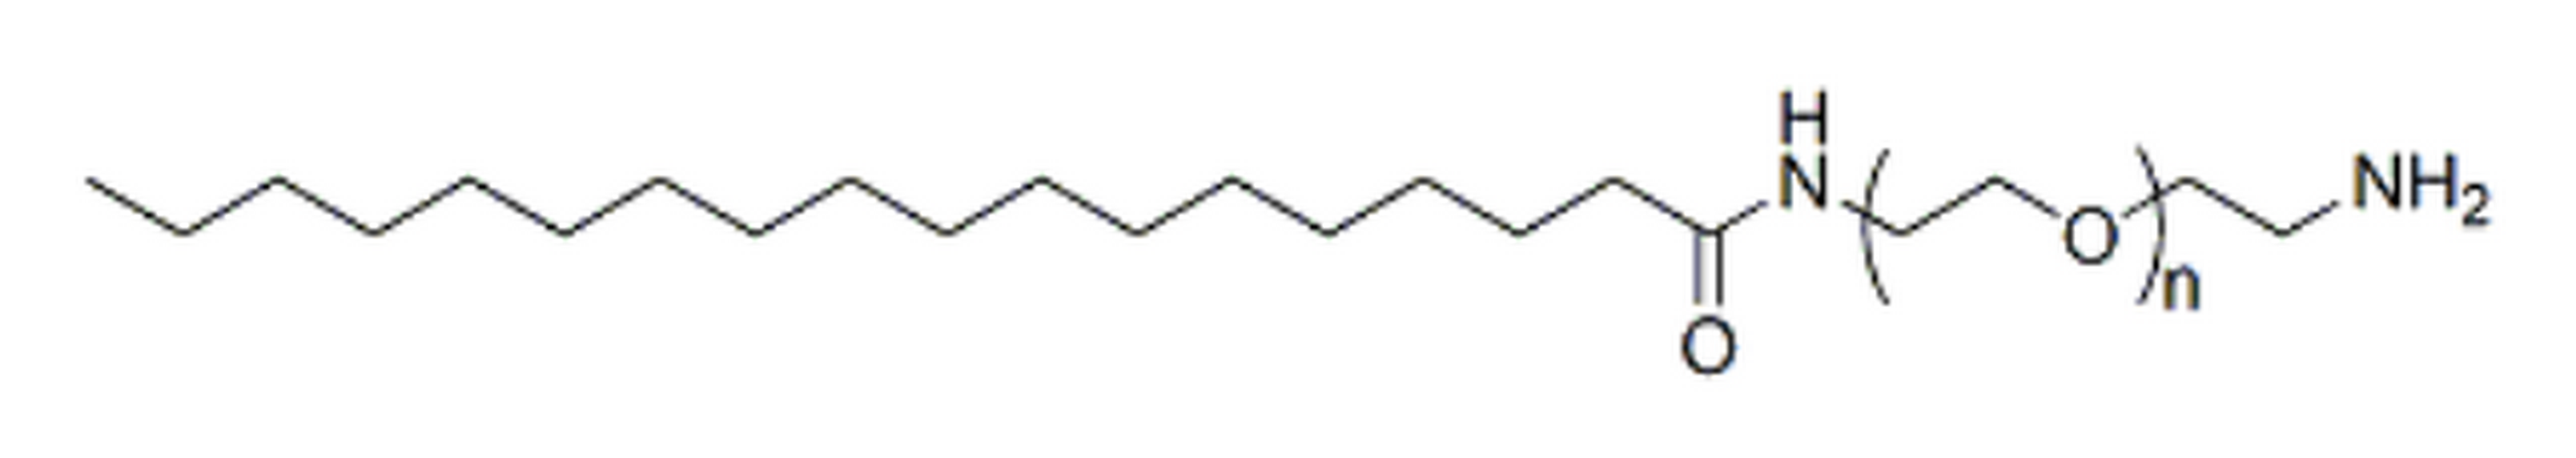 Stearic acid-PEG-amine, MW 1K